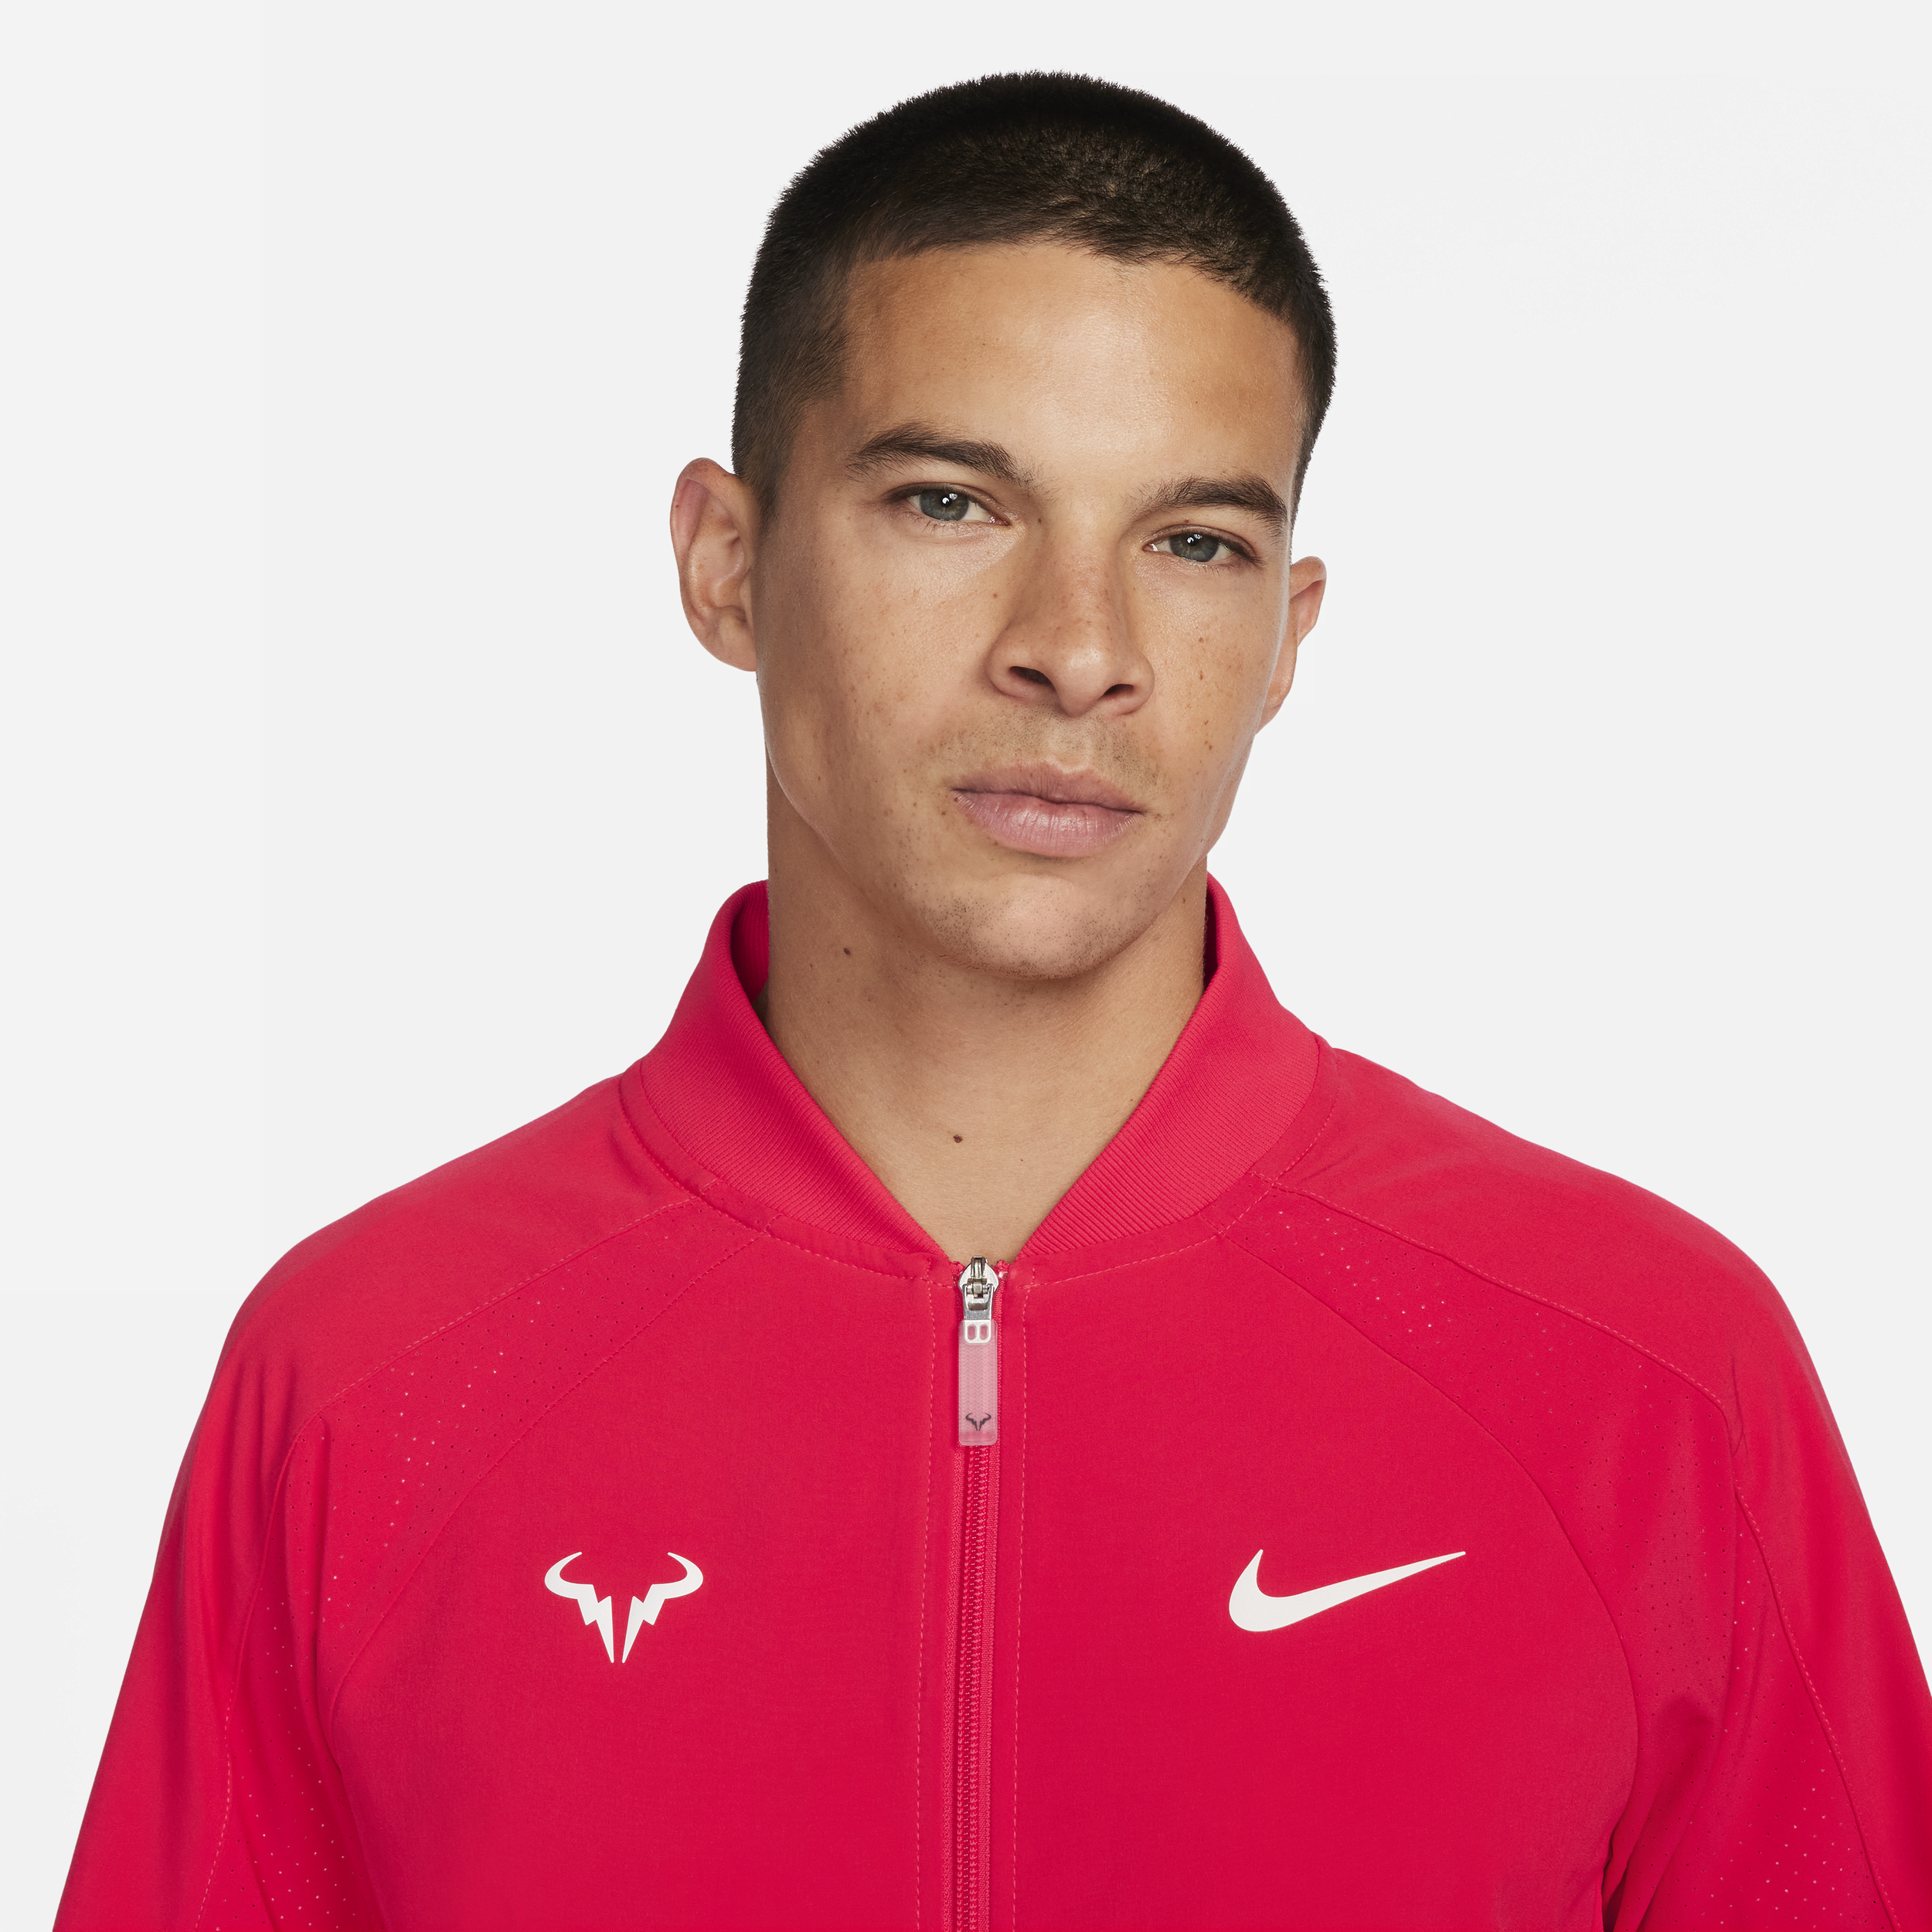 Nike Dri-FIT Rafa Tennisjack voor heren Rood